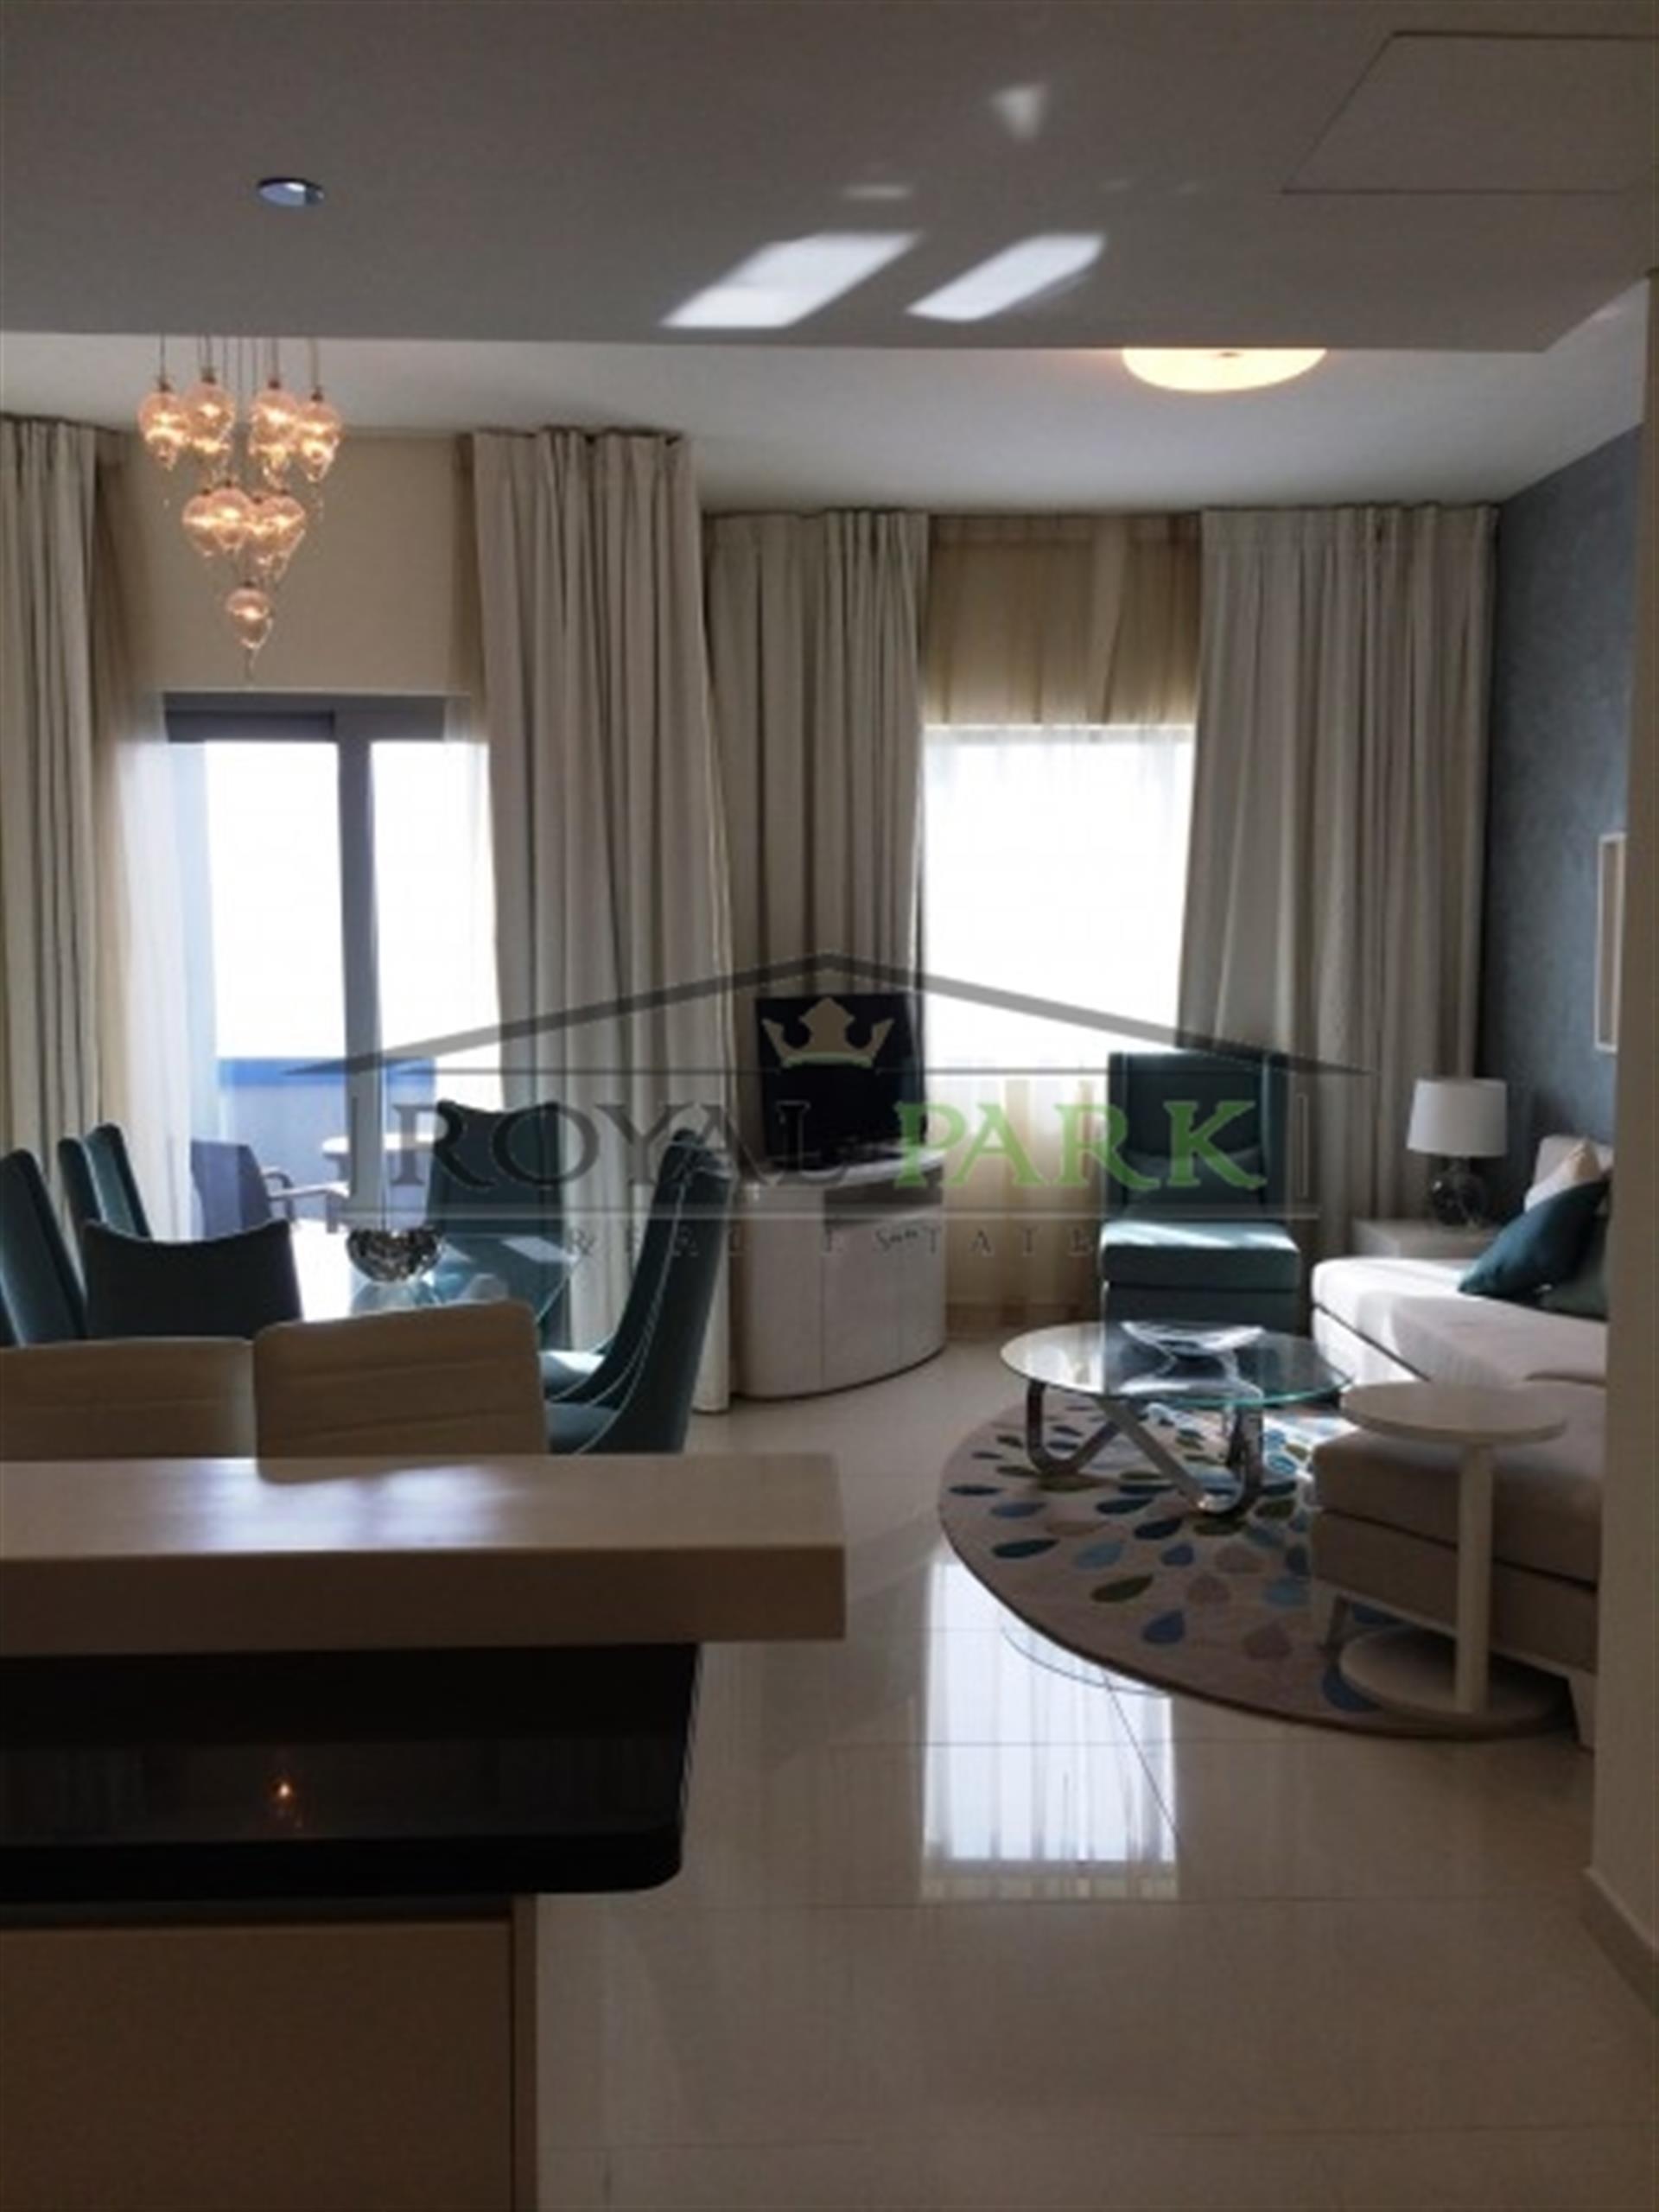 3 B/r+ Maids Hotel Apartment For Aed 7 M In Damac Maison , Downtown Dubai